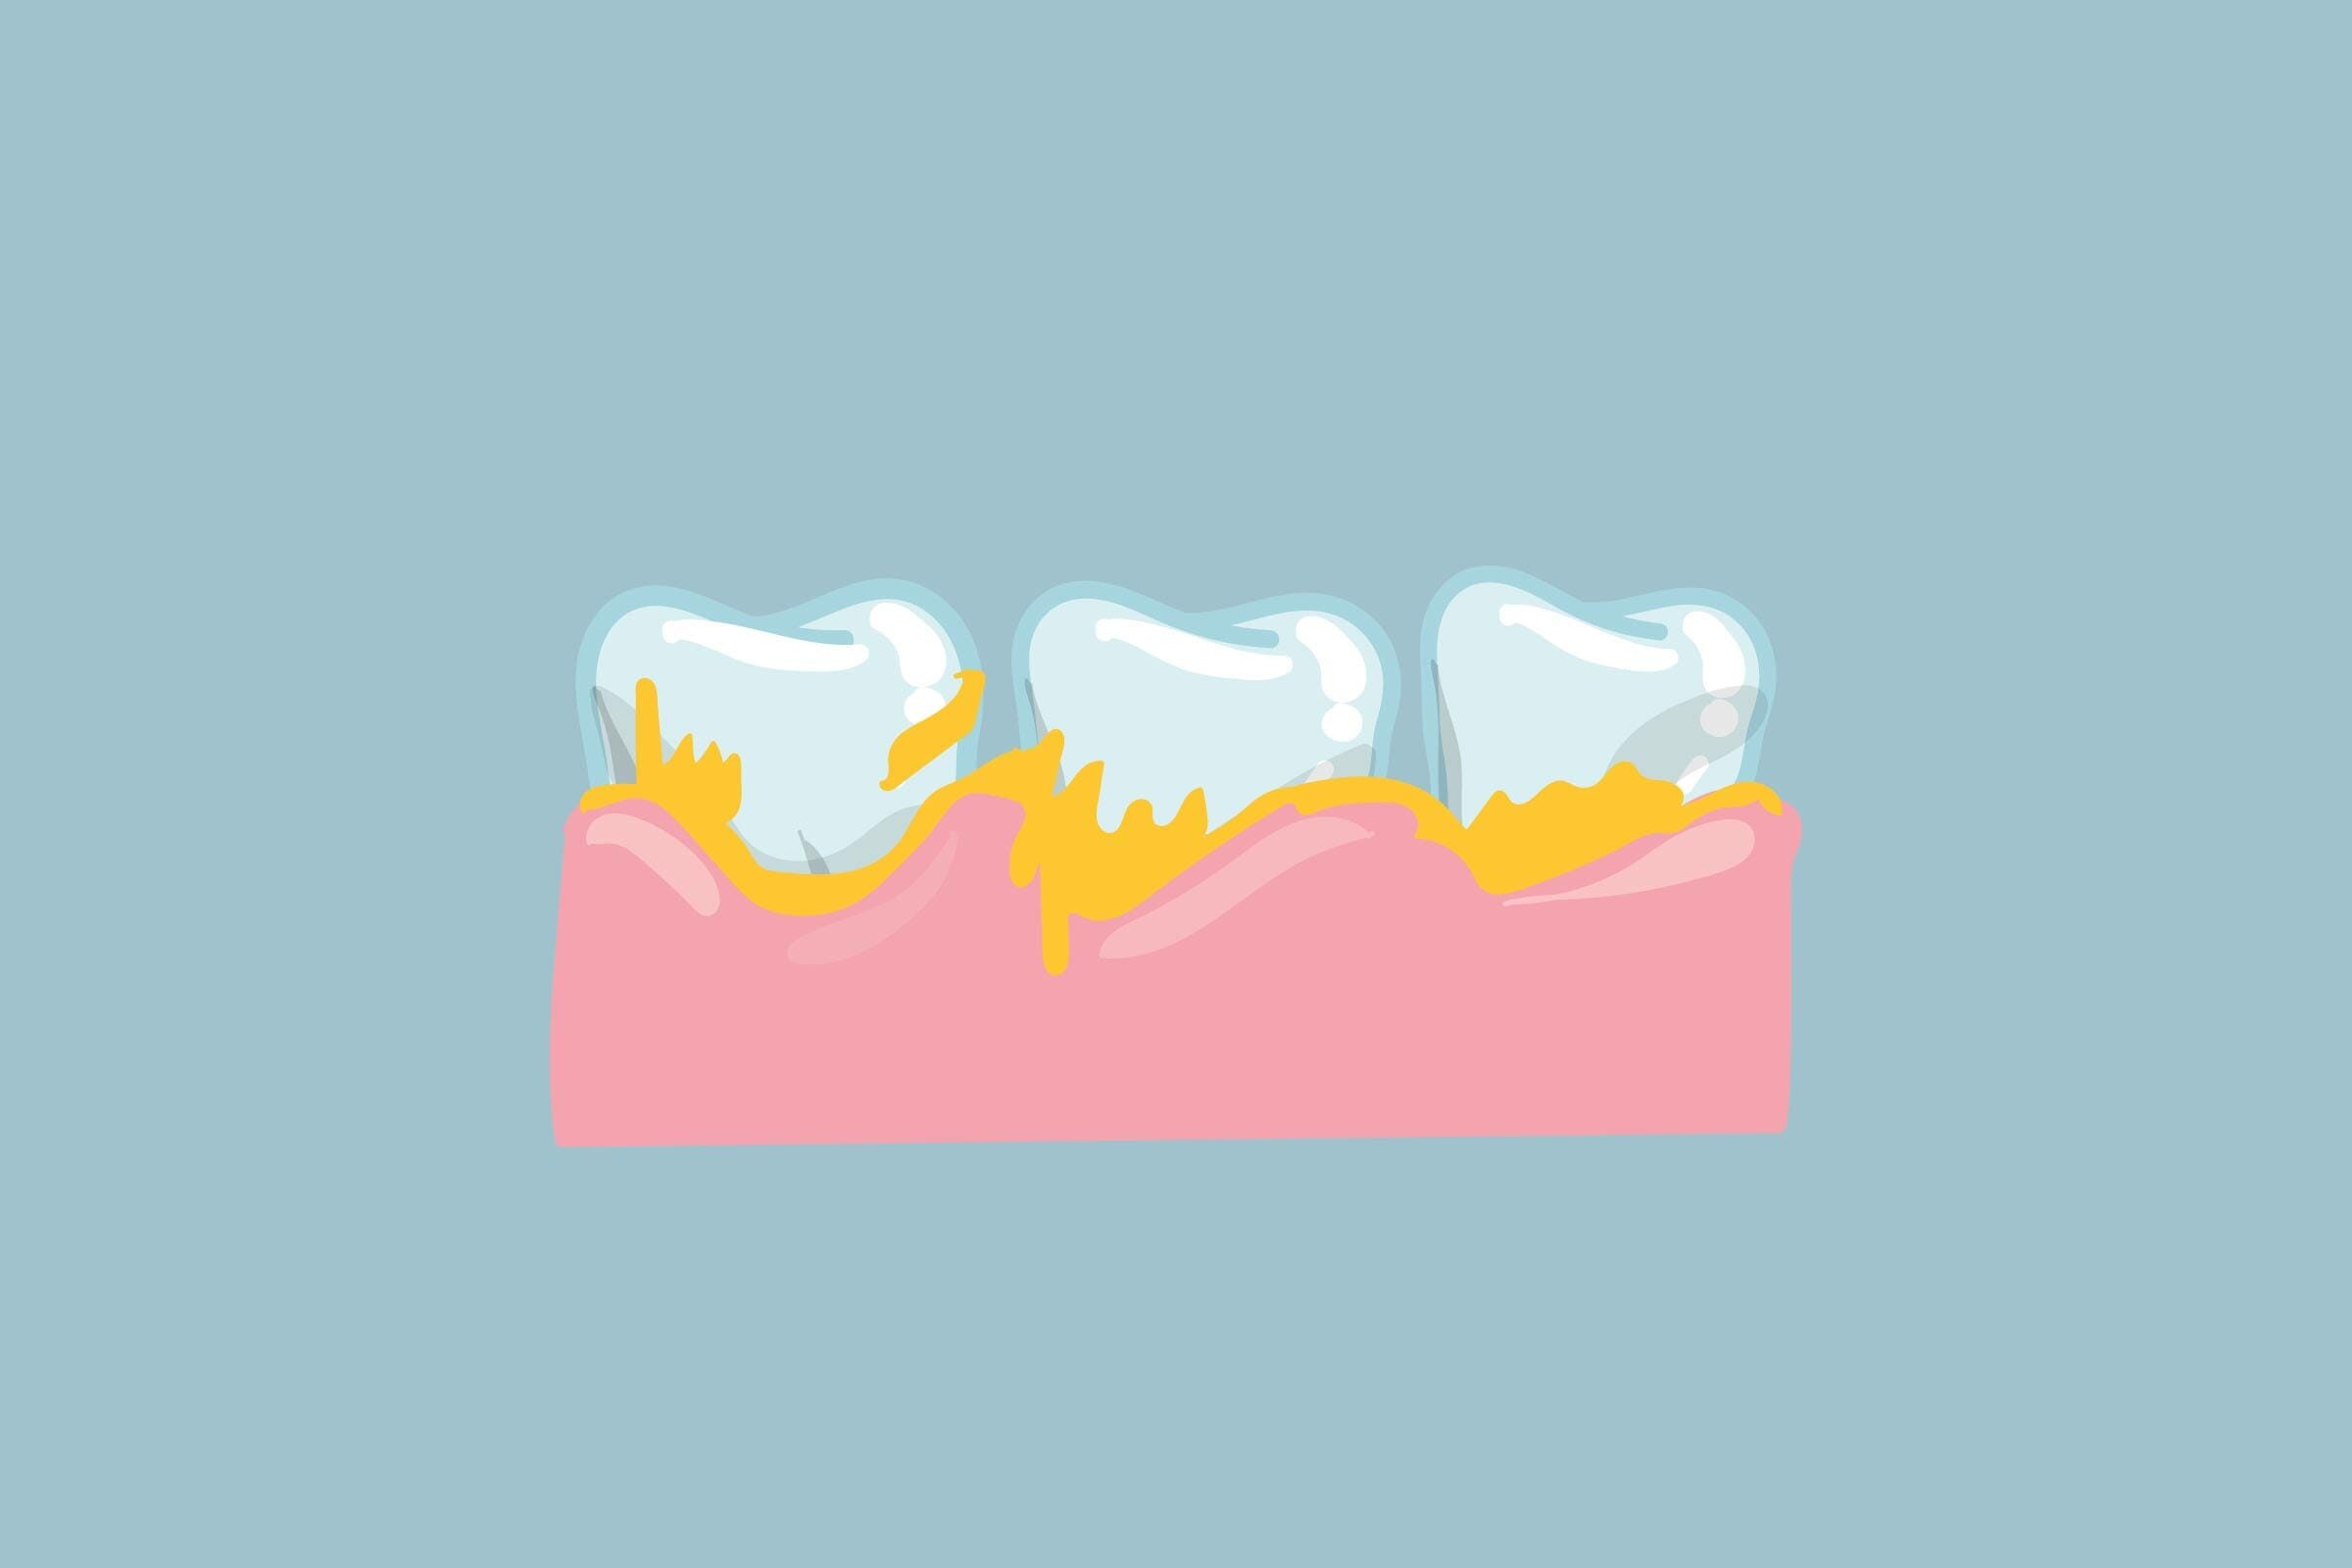 teeth with plaque buildup